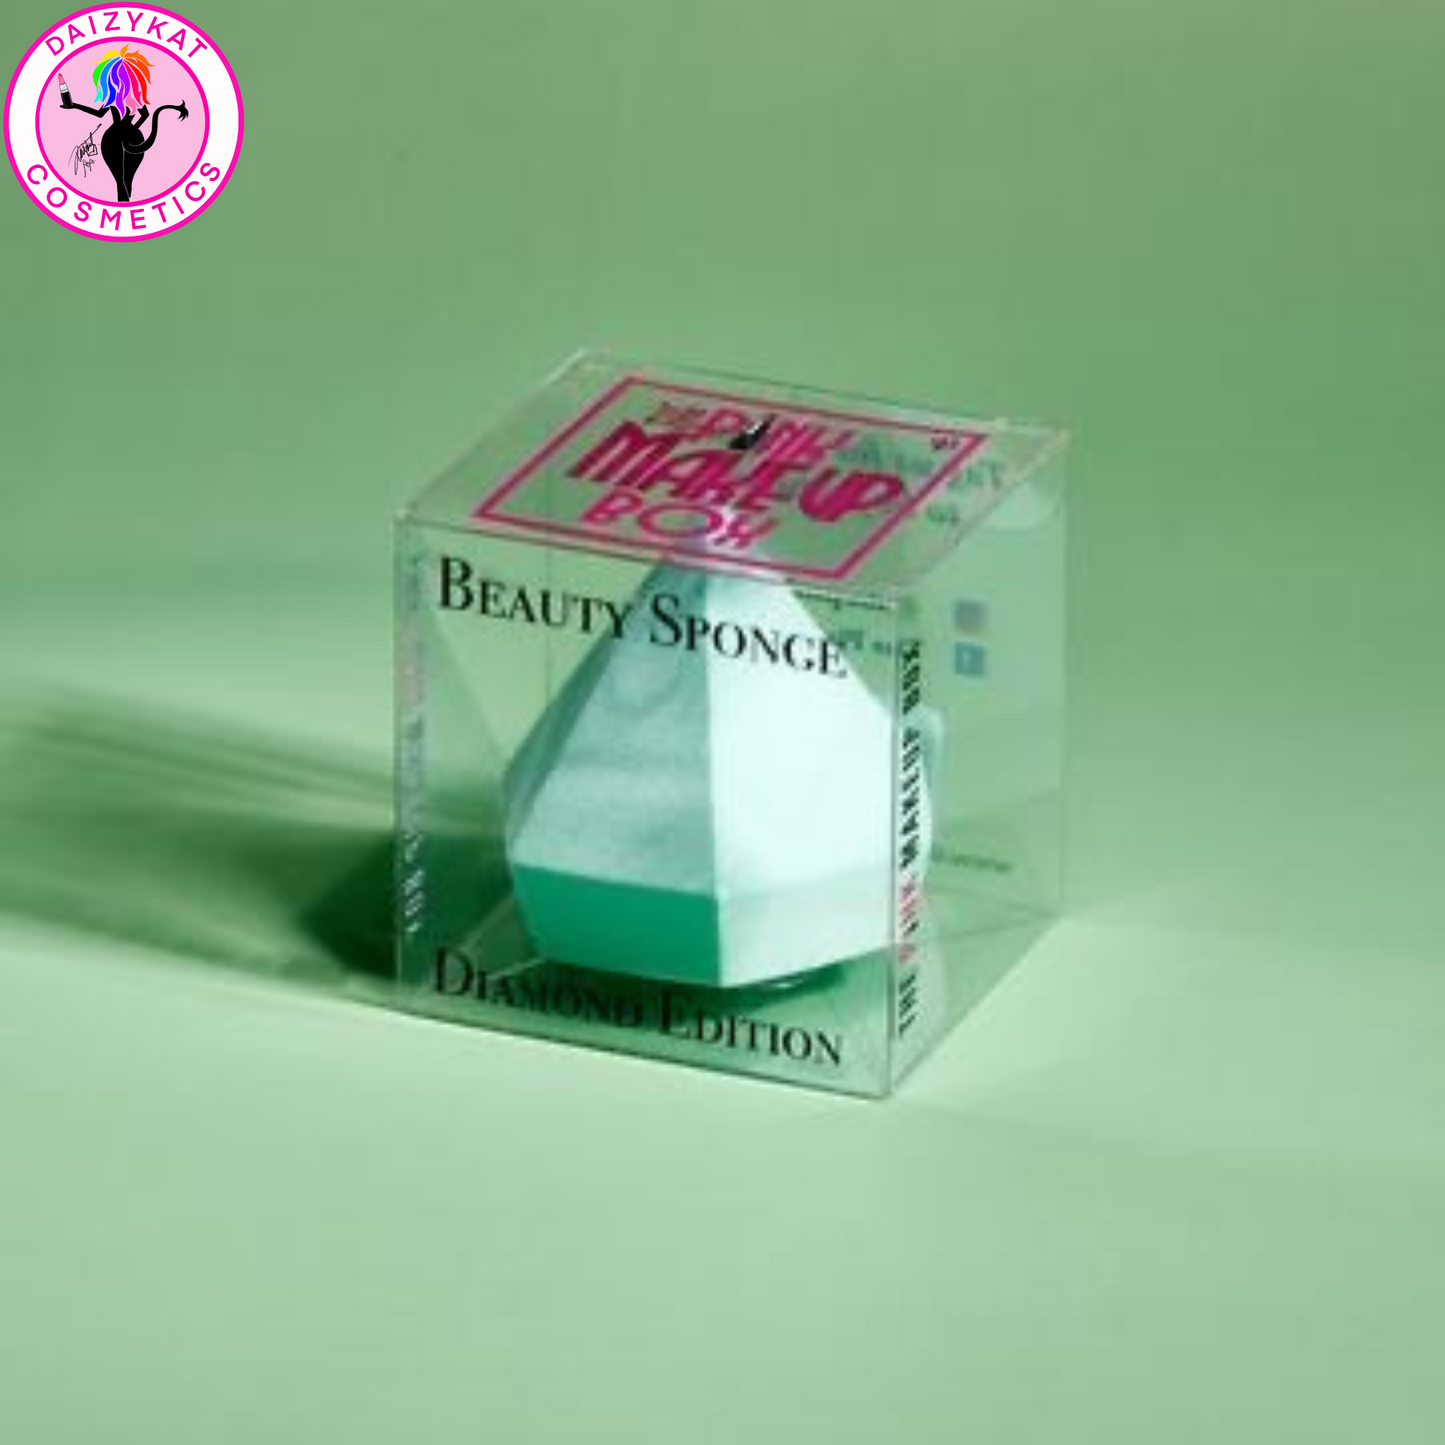 Beauty Sponge (Diamond Edition) - Turquoise